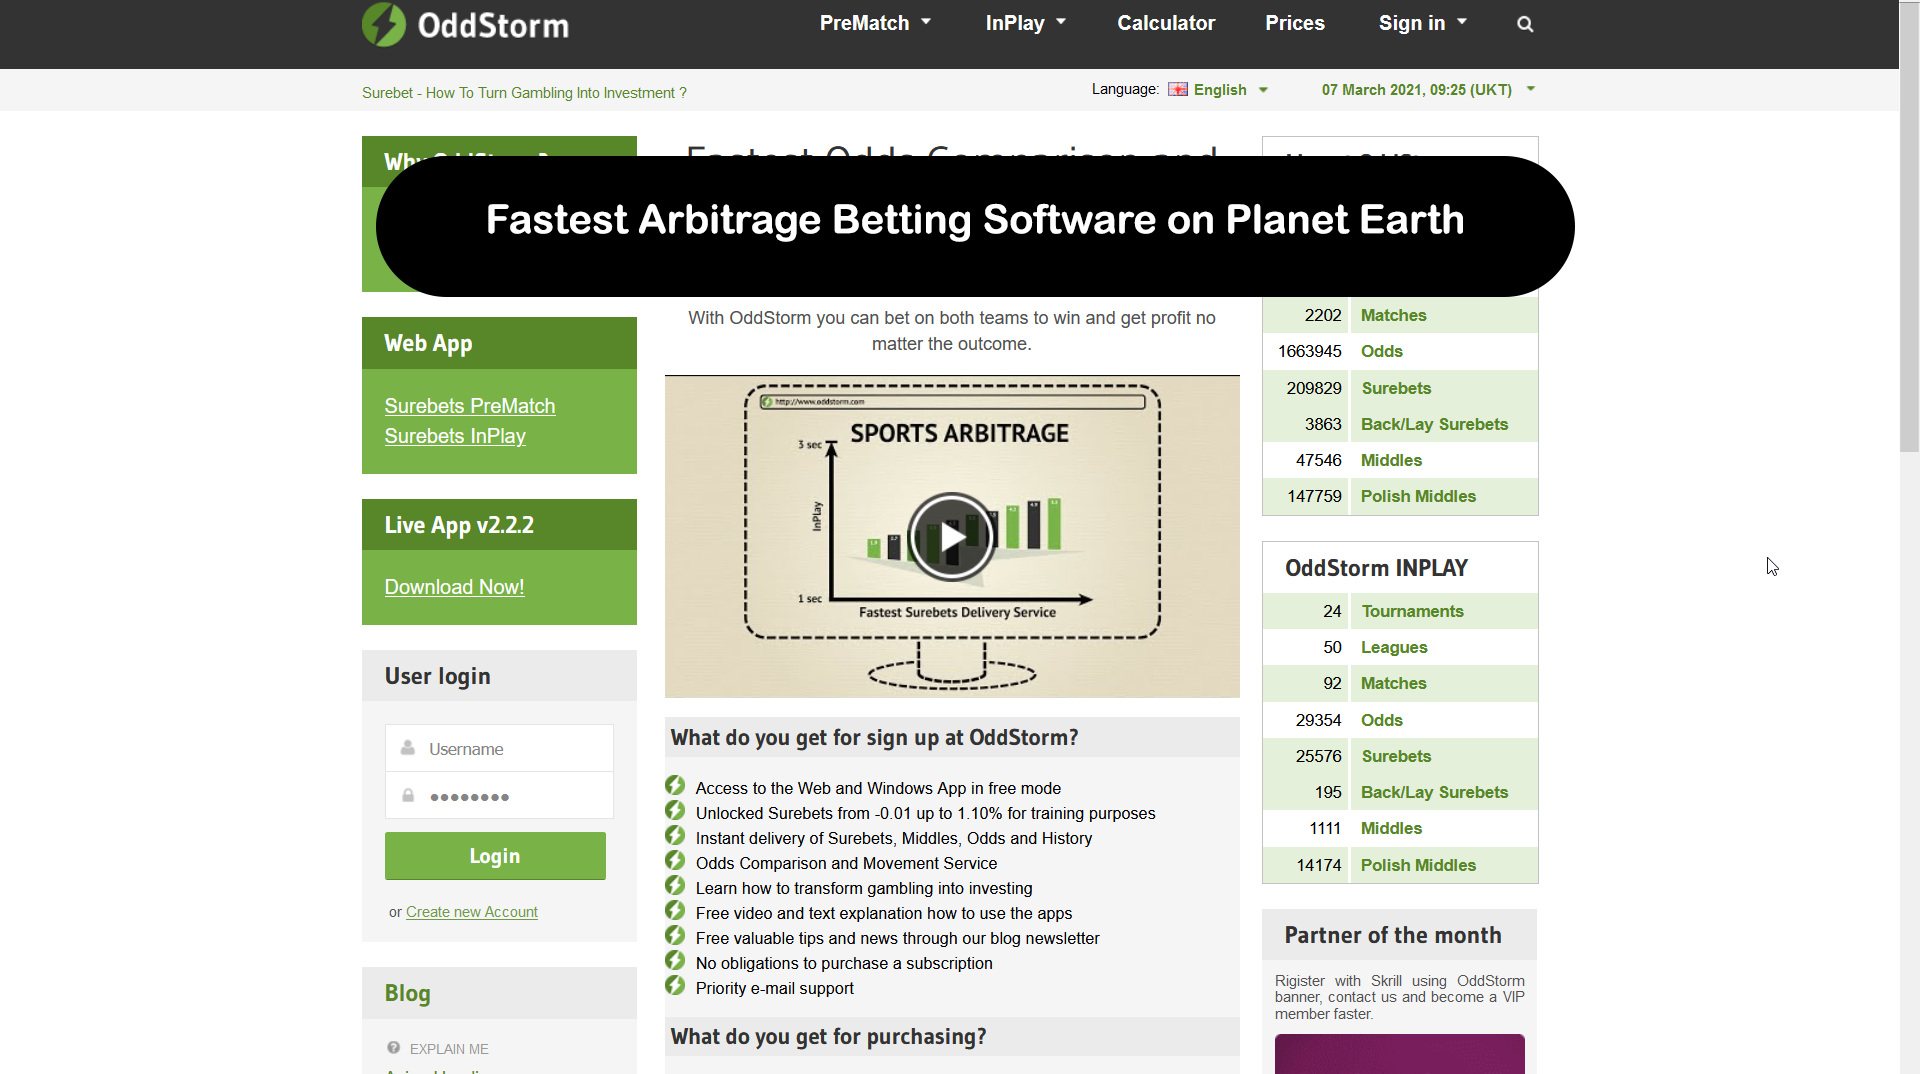 OddStorm_Best_Arbitrage_Betting_Software